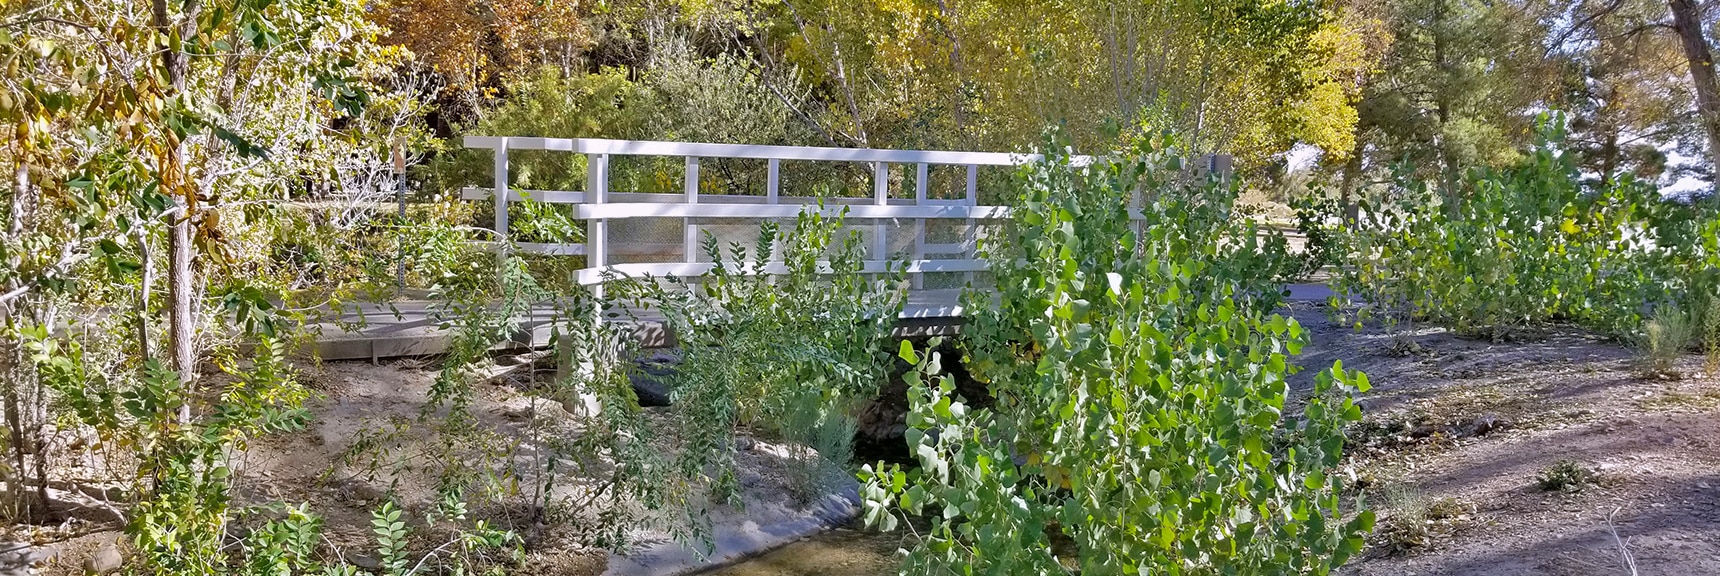 Bridge Over a Stream at Floyd Lamb Park | Centennial Hills Mountain Bike Conditioning Adventure Loop, Las Vegas, Nevada